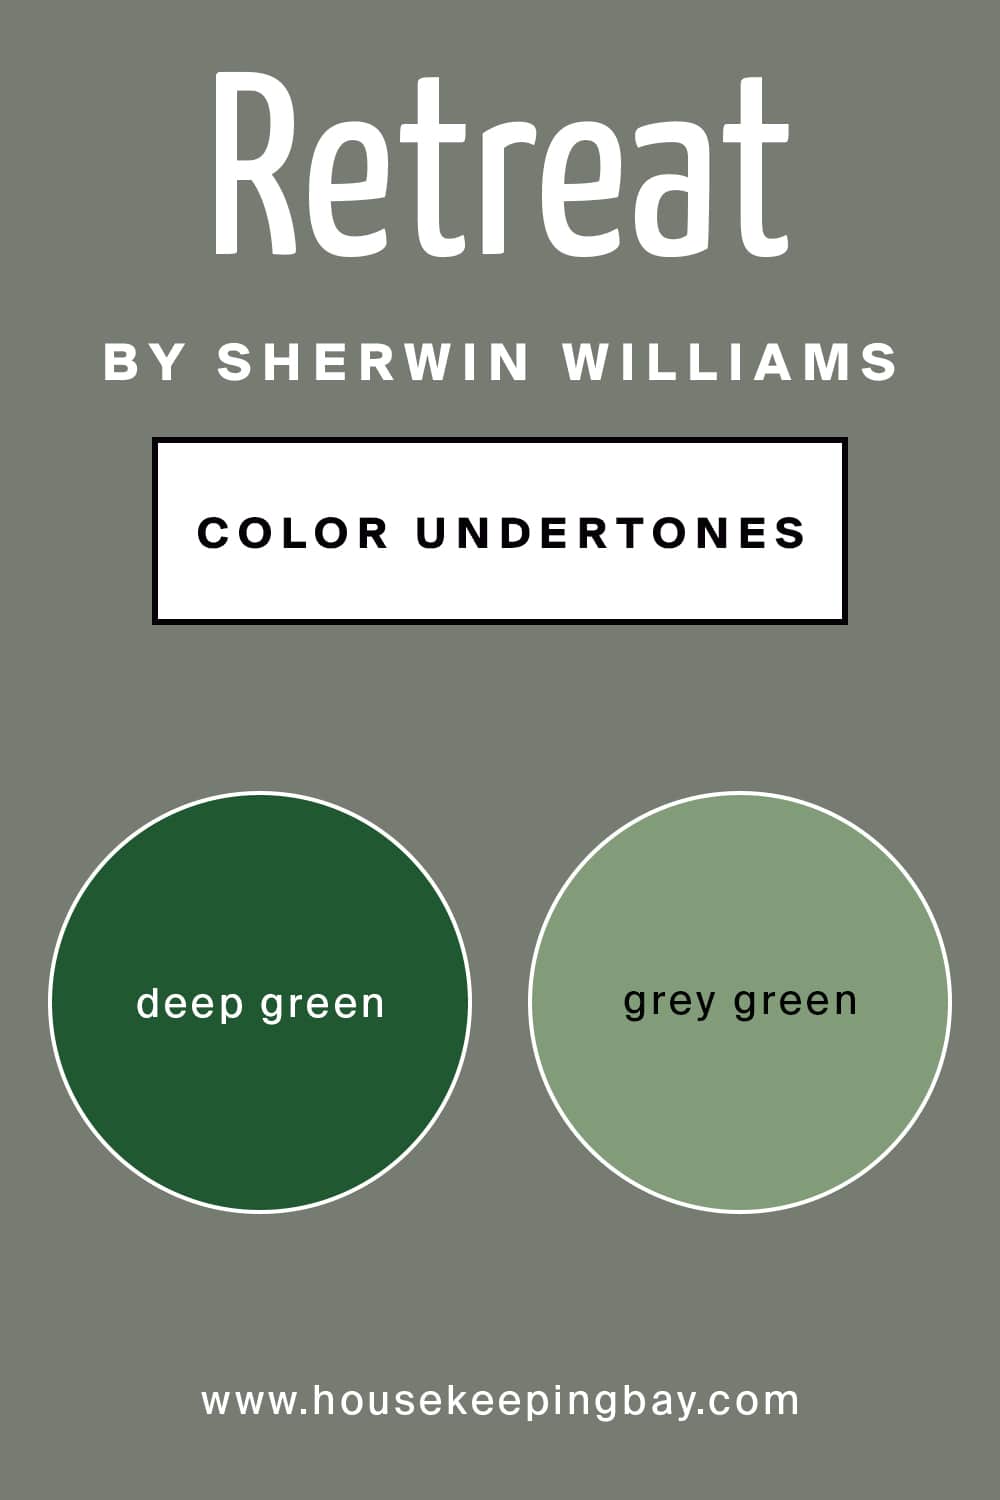 Retreat by Sherwin Williams Color Undertones